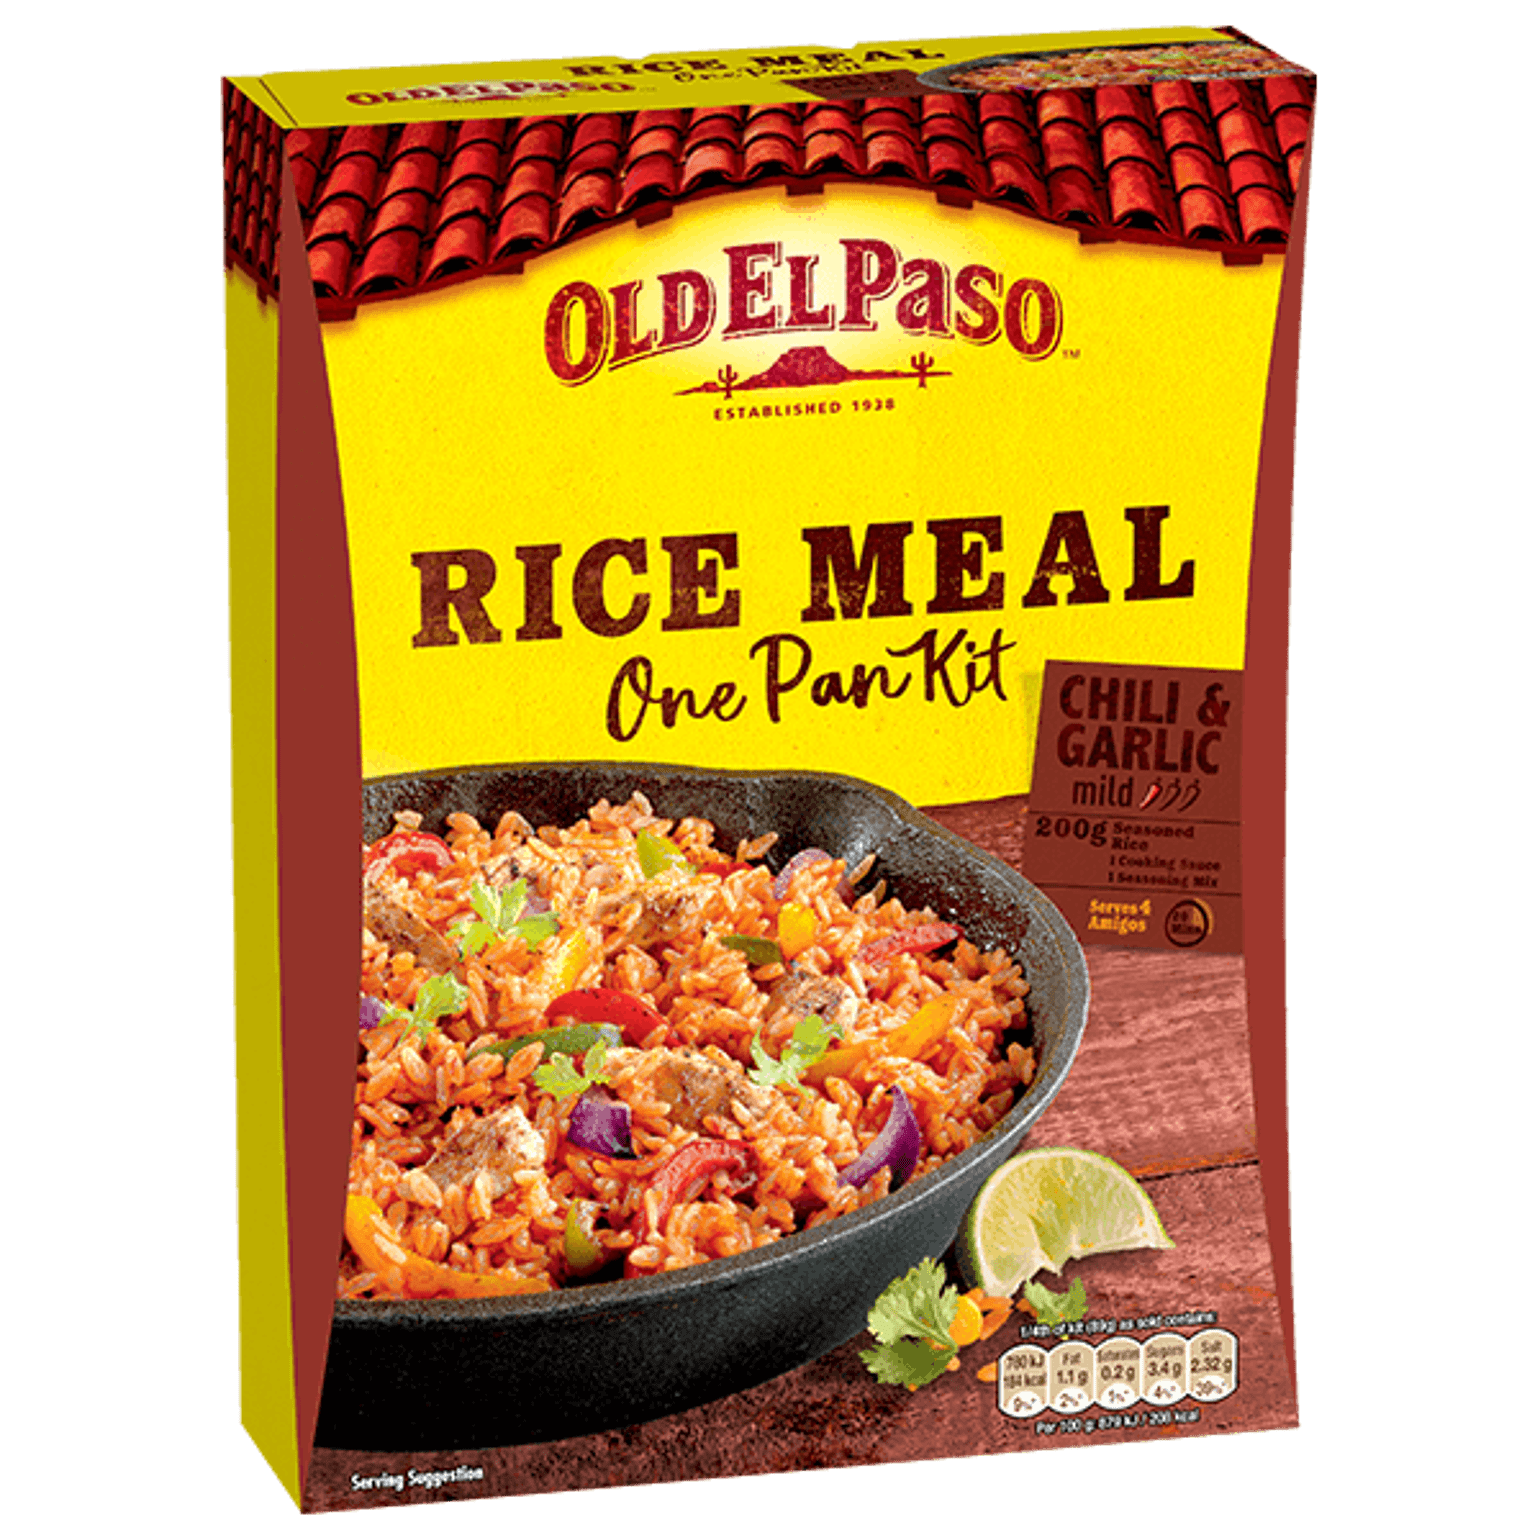 pack of Old El Paso's chili garlic one pan rice meal kit containing seasoned rice, cooking sauce & seasoning mix